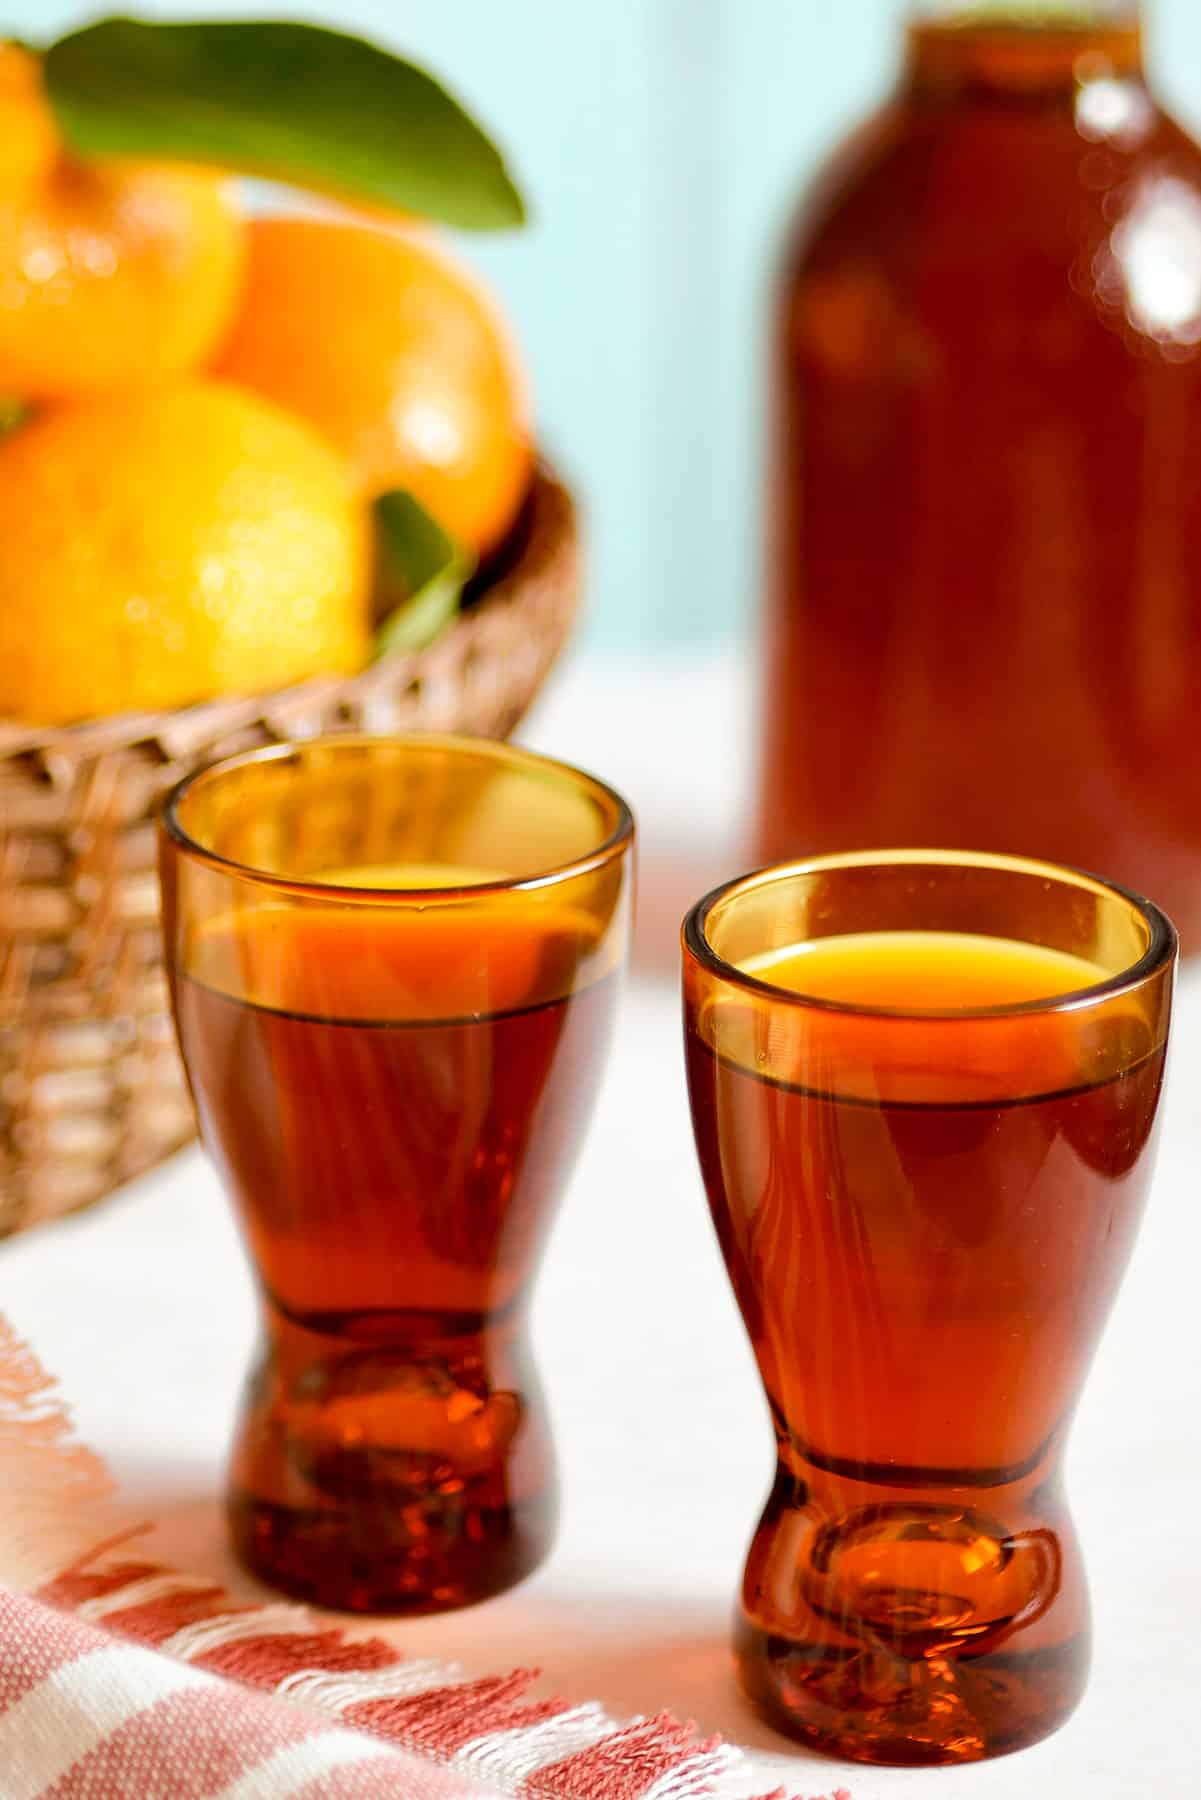 Orancello (homemade orange liqueur).